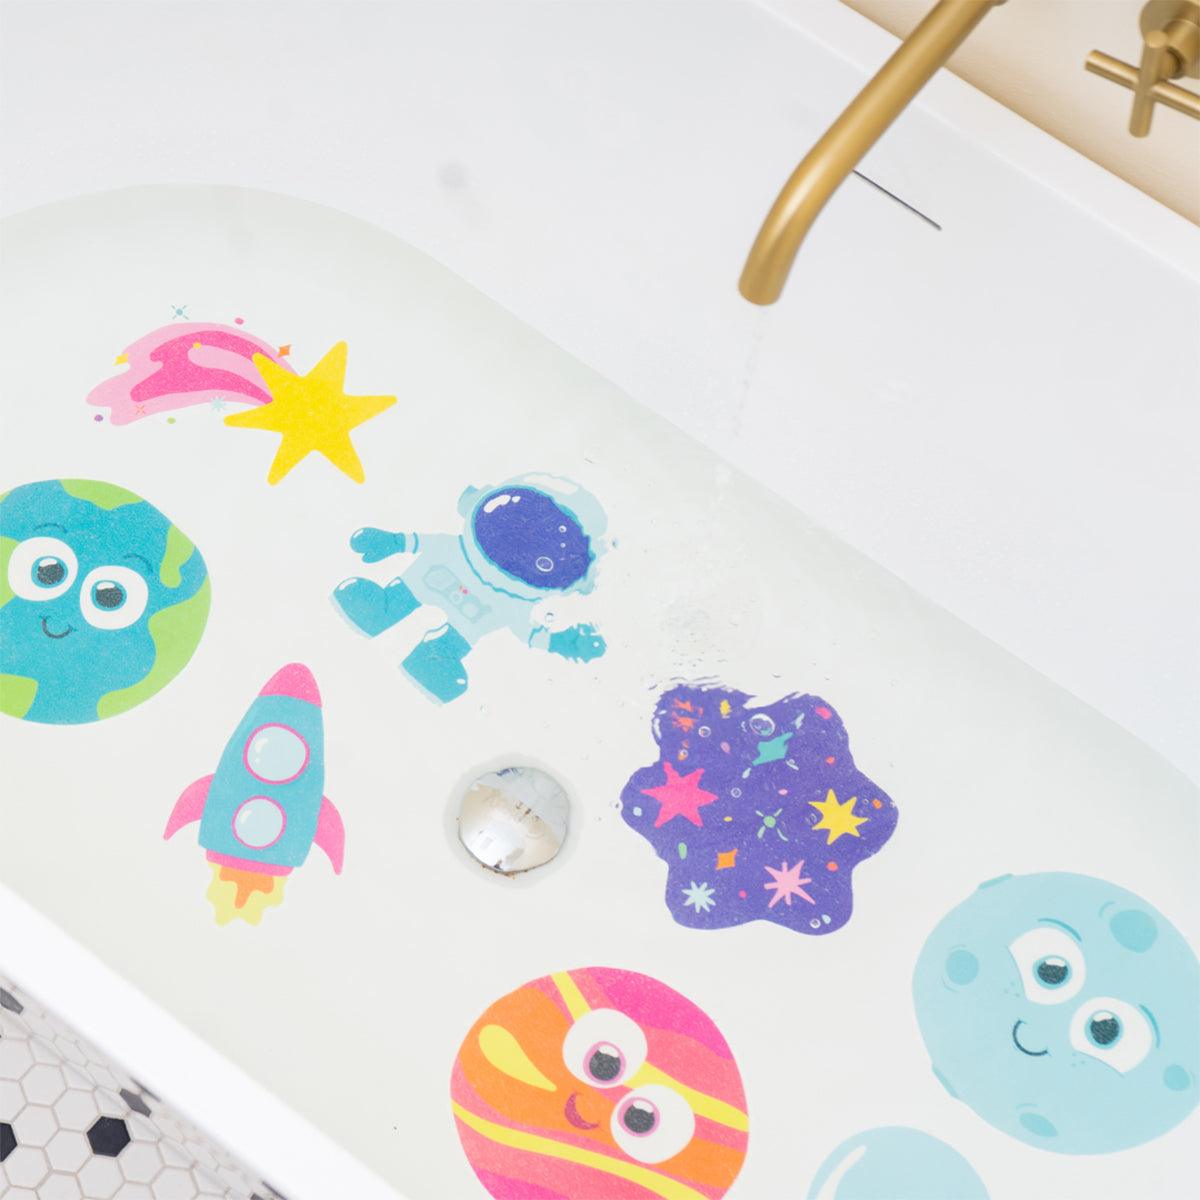 Glo Pals: Galaxy Grips non-slip bathtub stickers